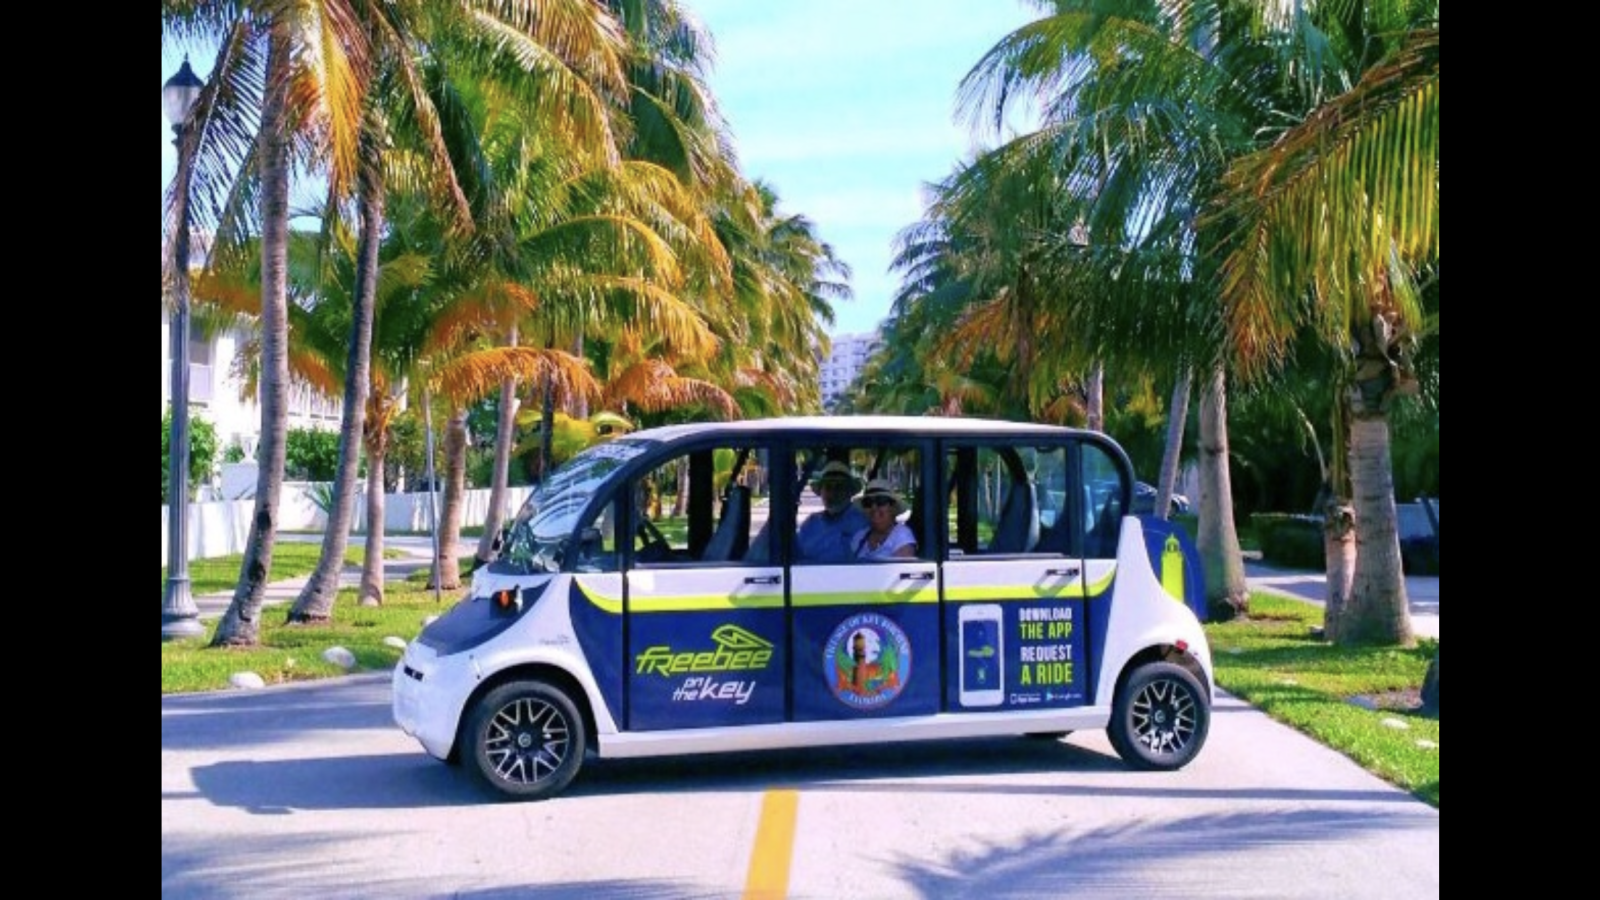 Freebee is Now in Downtown Miami! < Miami Parking Authority